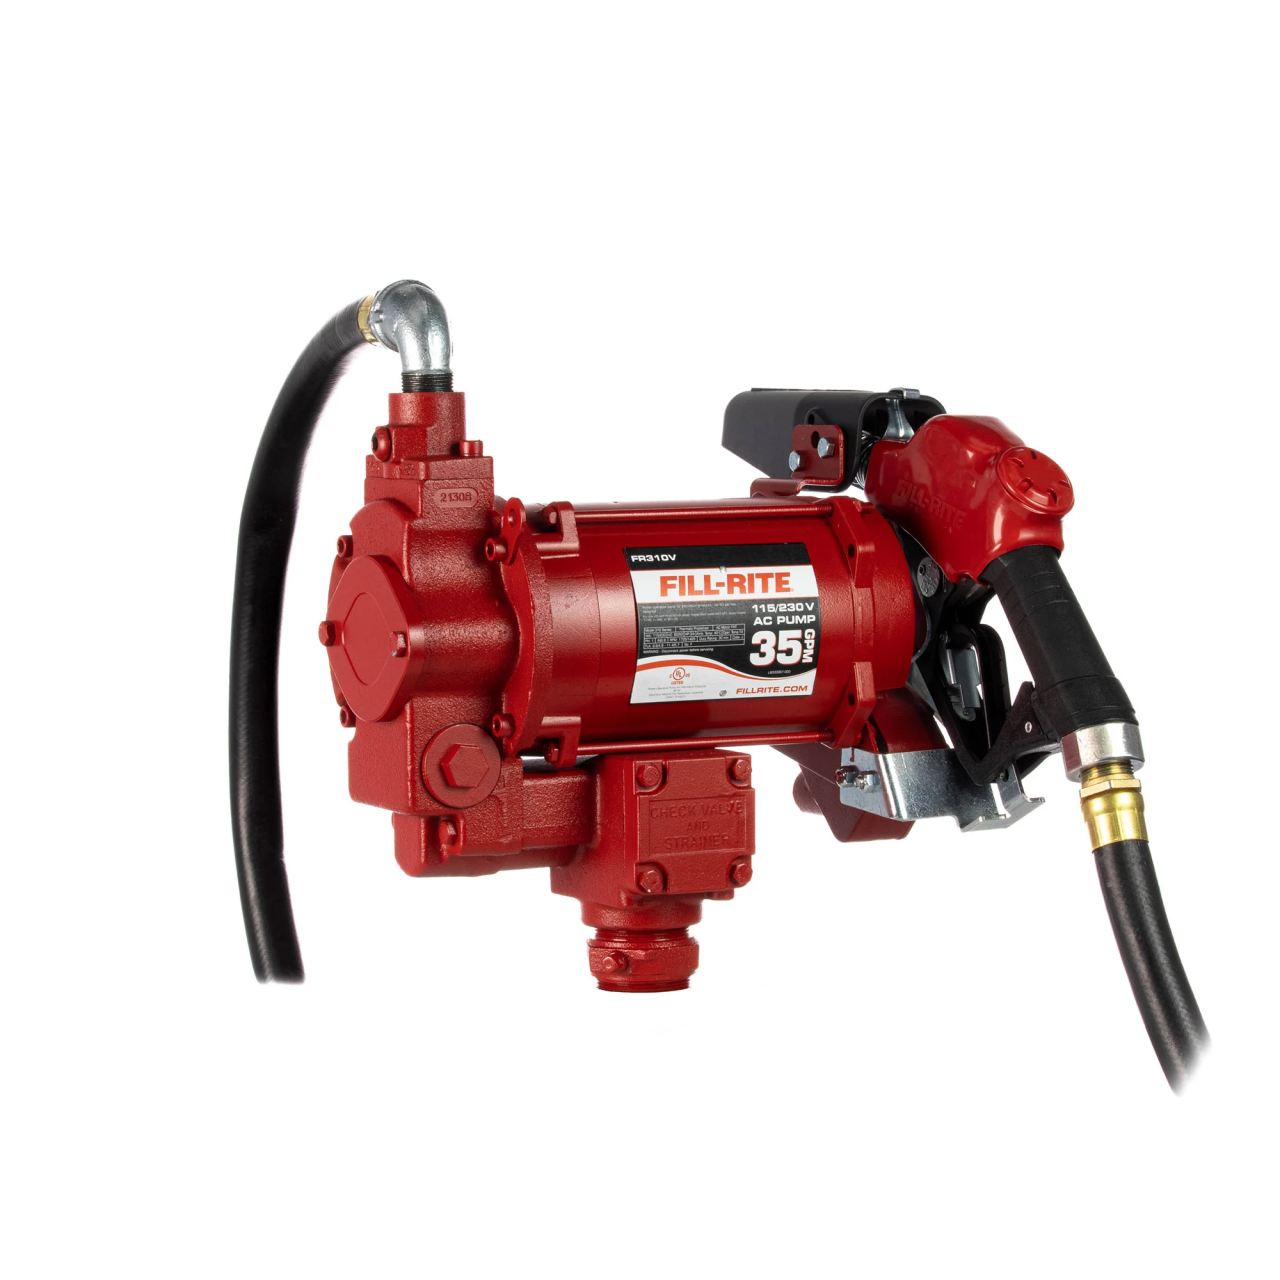 Fill-Rite FR310VB 115/230V AC Hi-Flow Transfer Pump w/ Auto Nozzle - 35 GPM